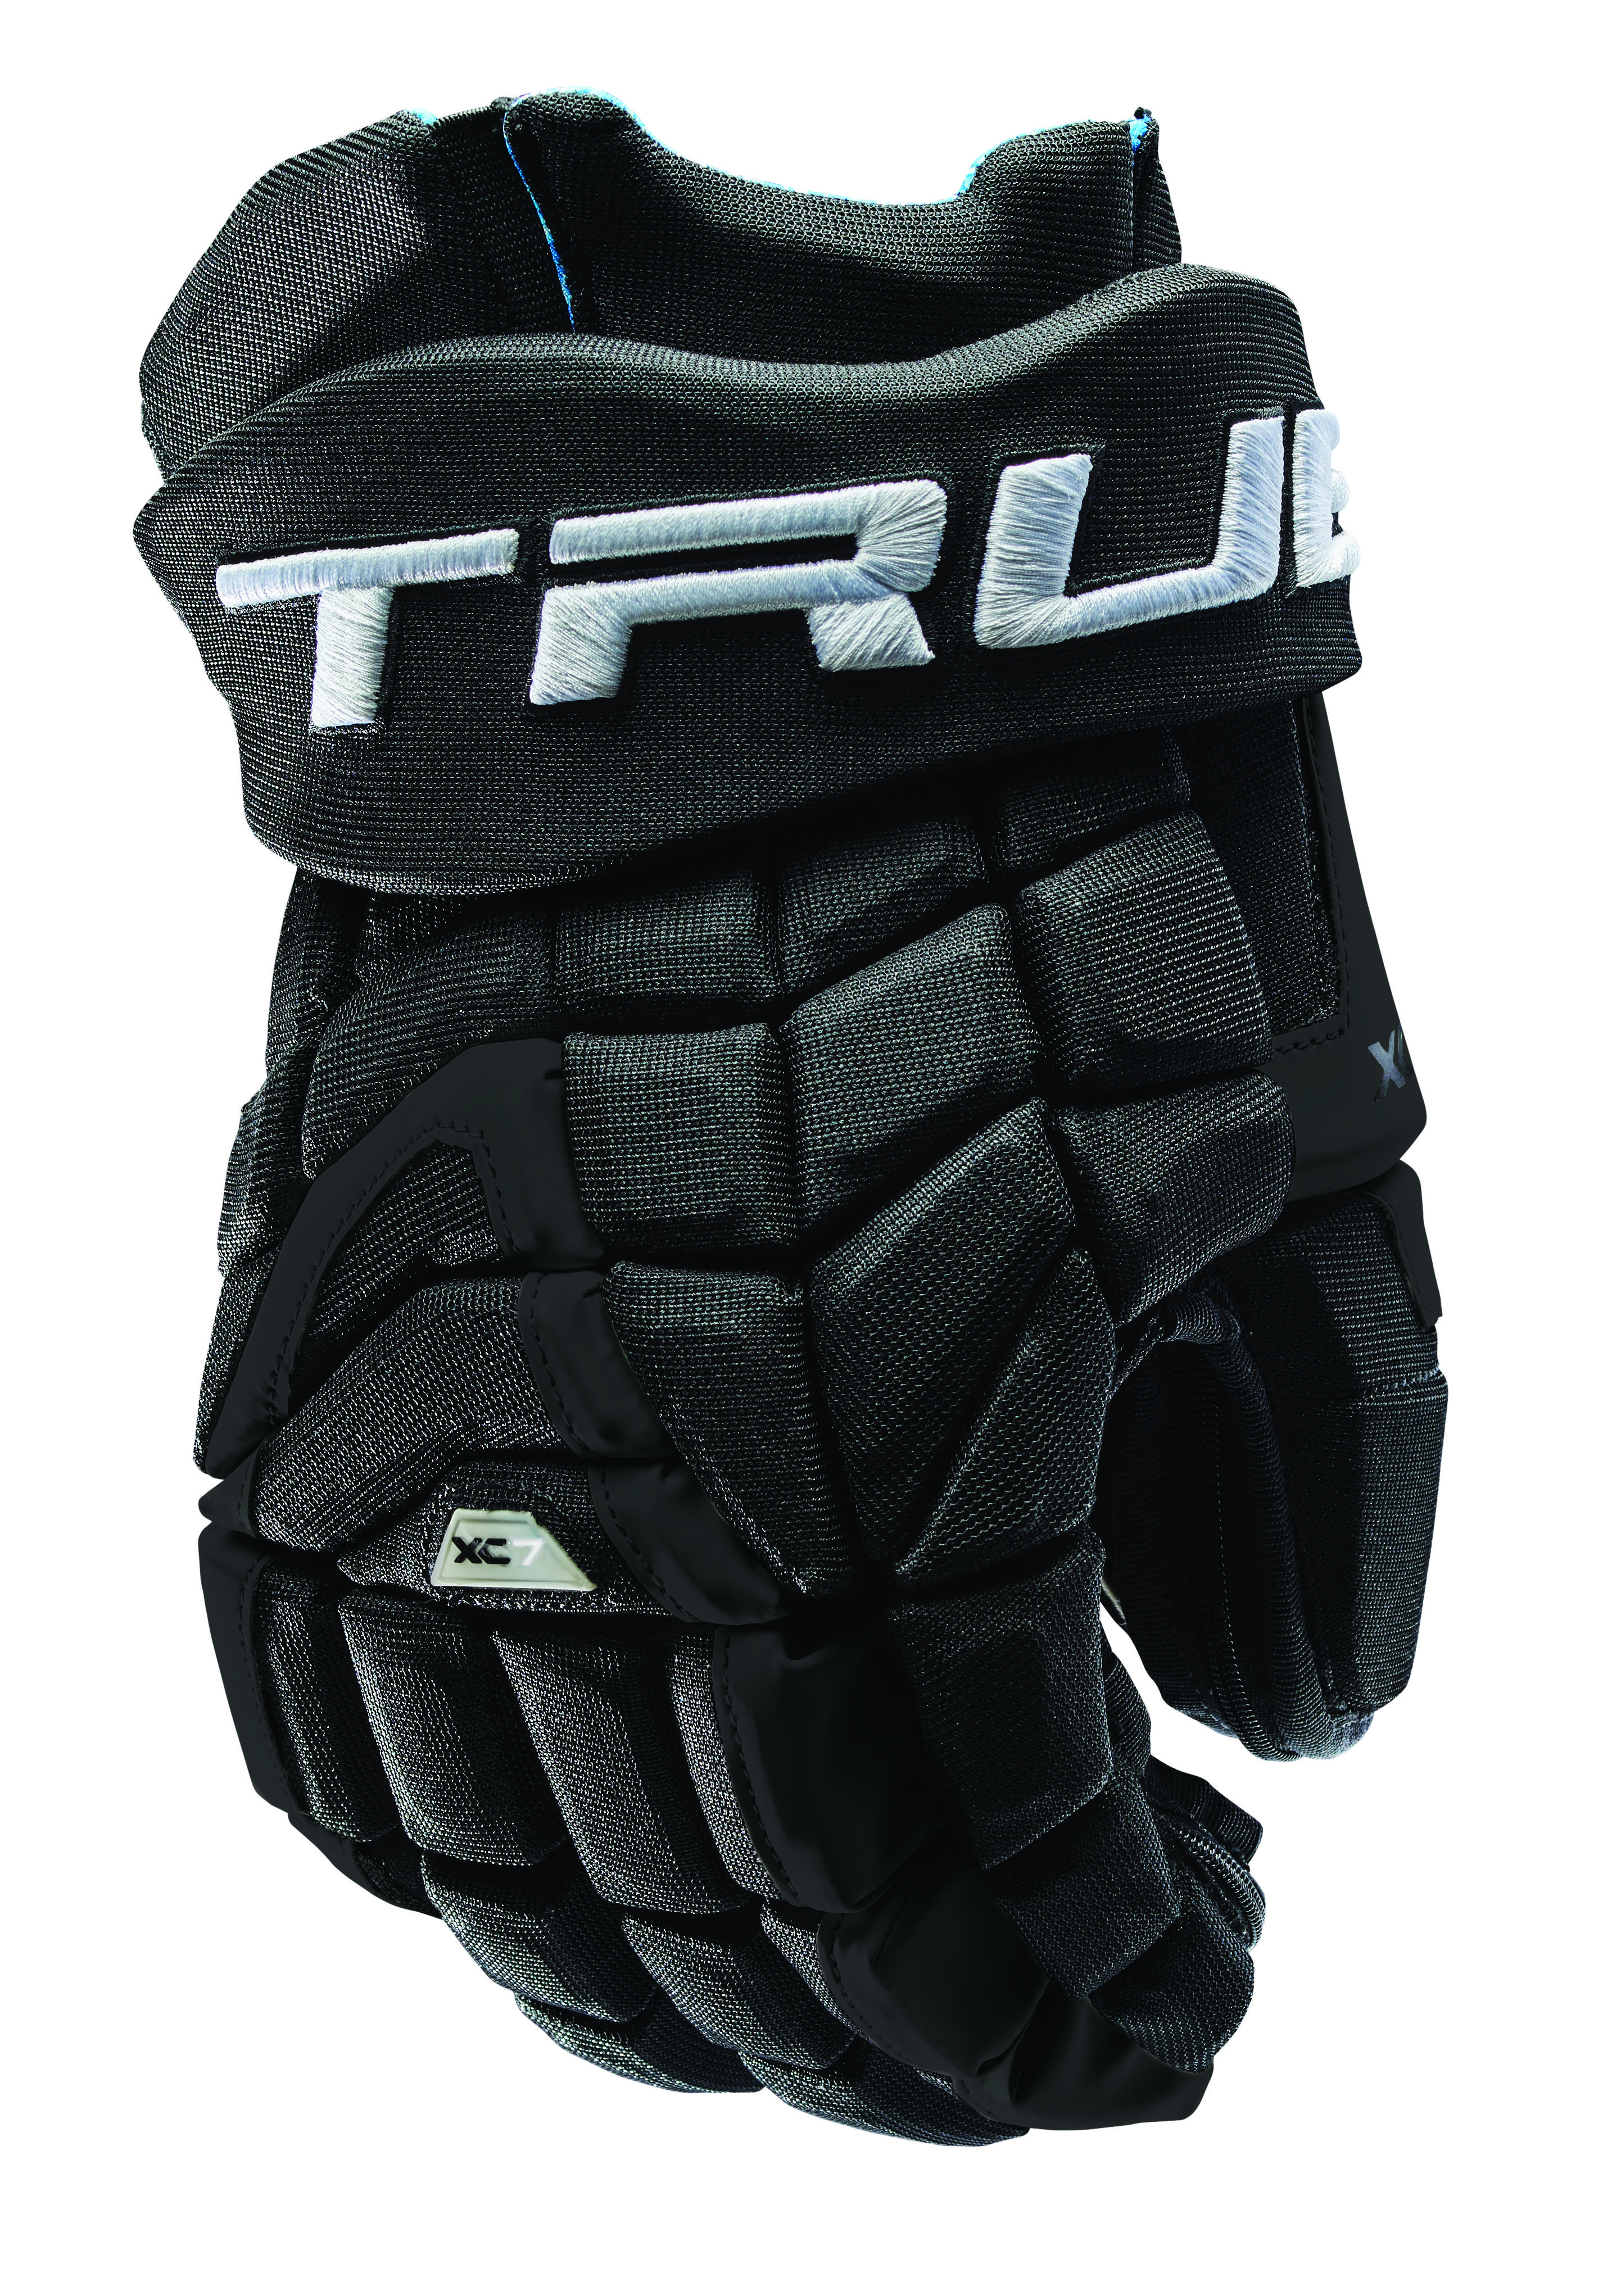 TRUE Xcore 7 S18 Senior Ice Hockey GlovesRoller Hockey GlovesTrue GlovesRolle